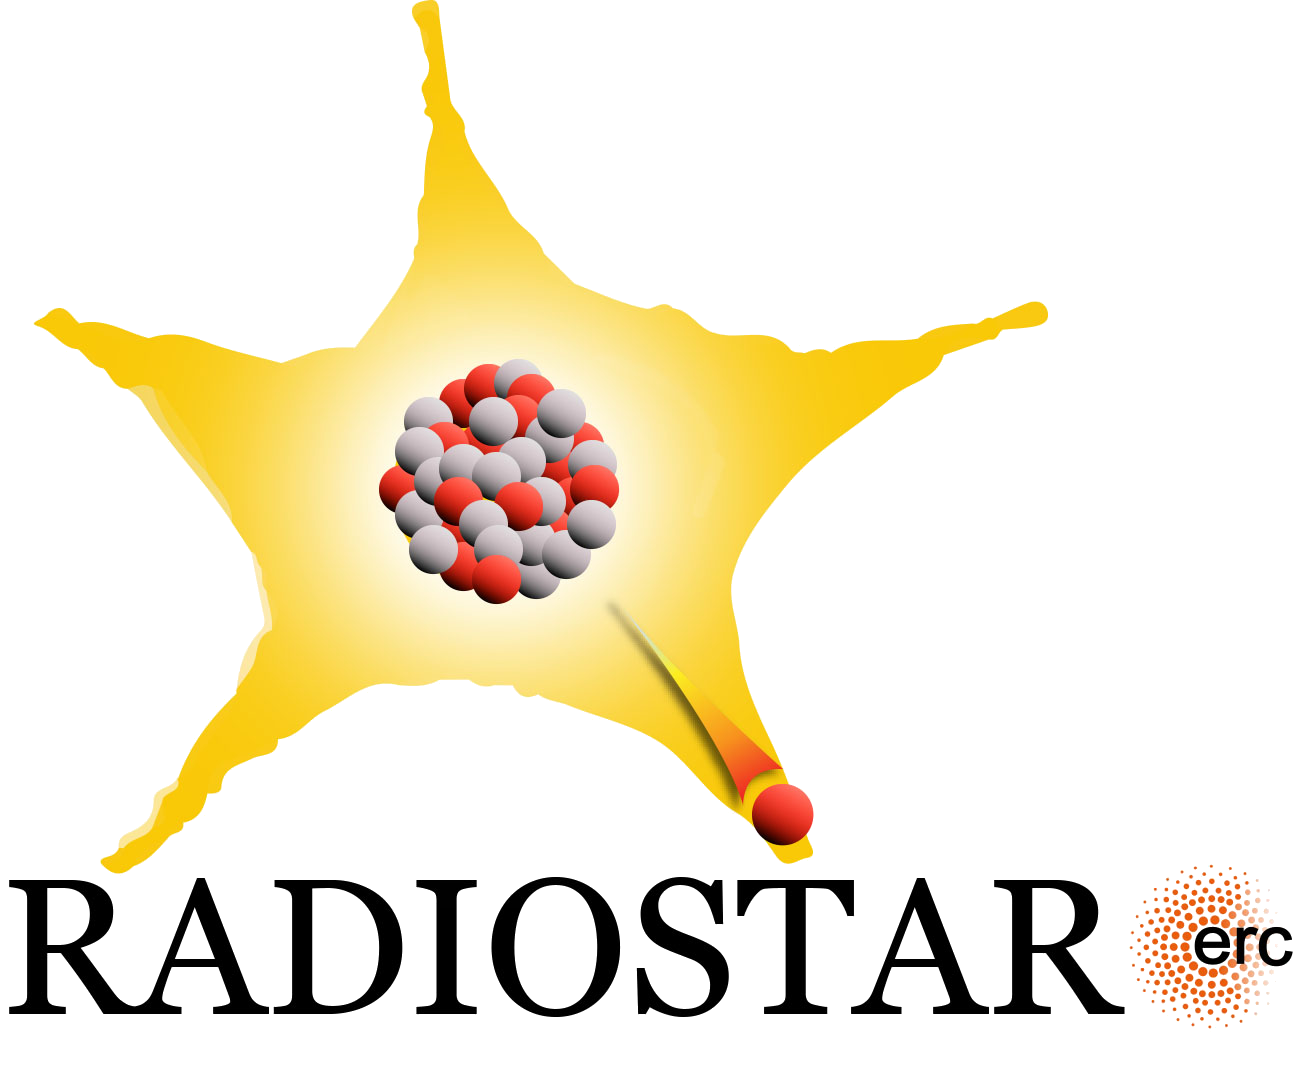 RadioStar logo